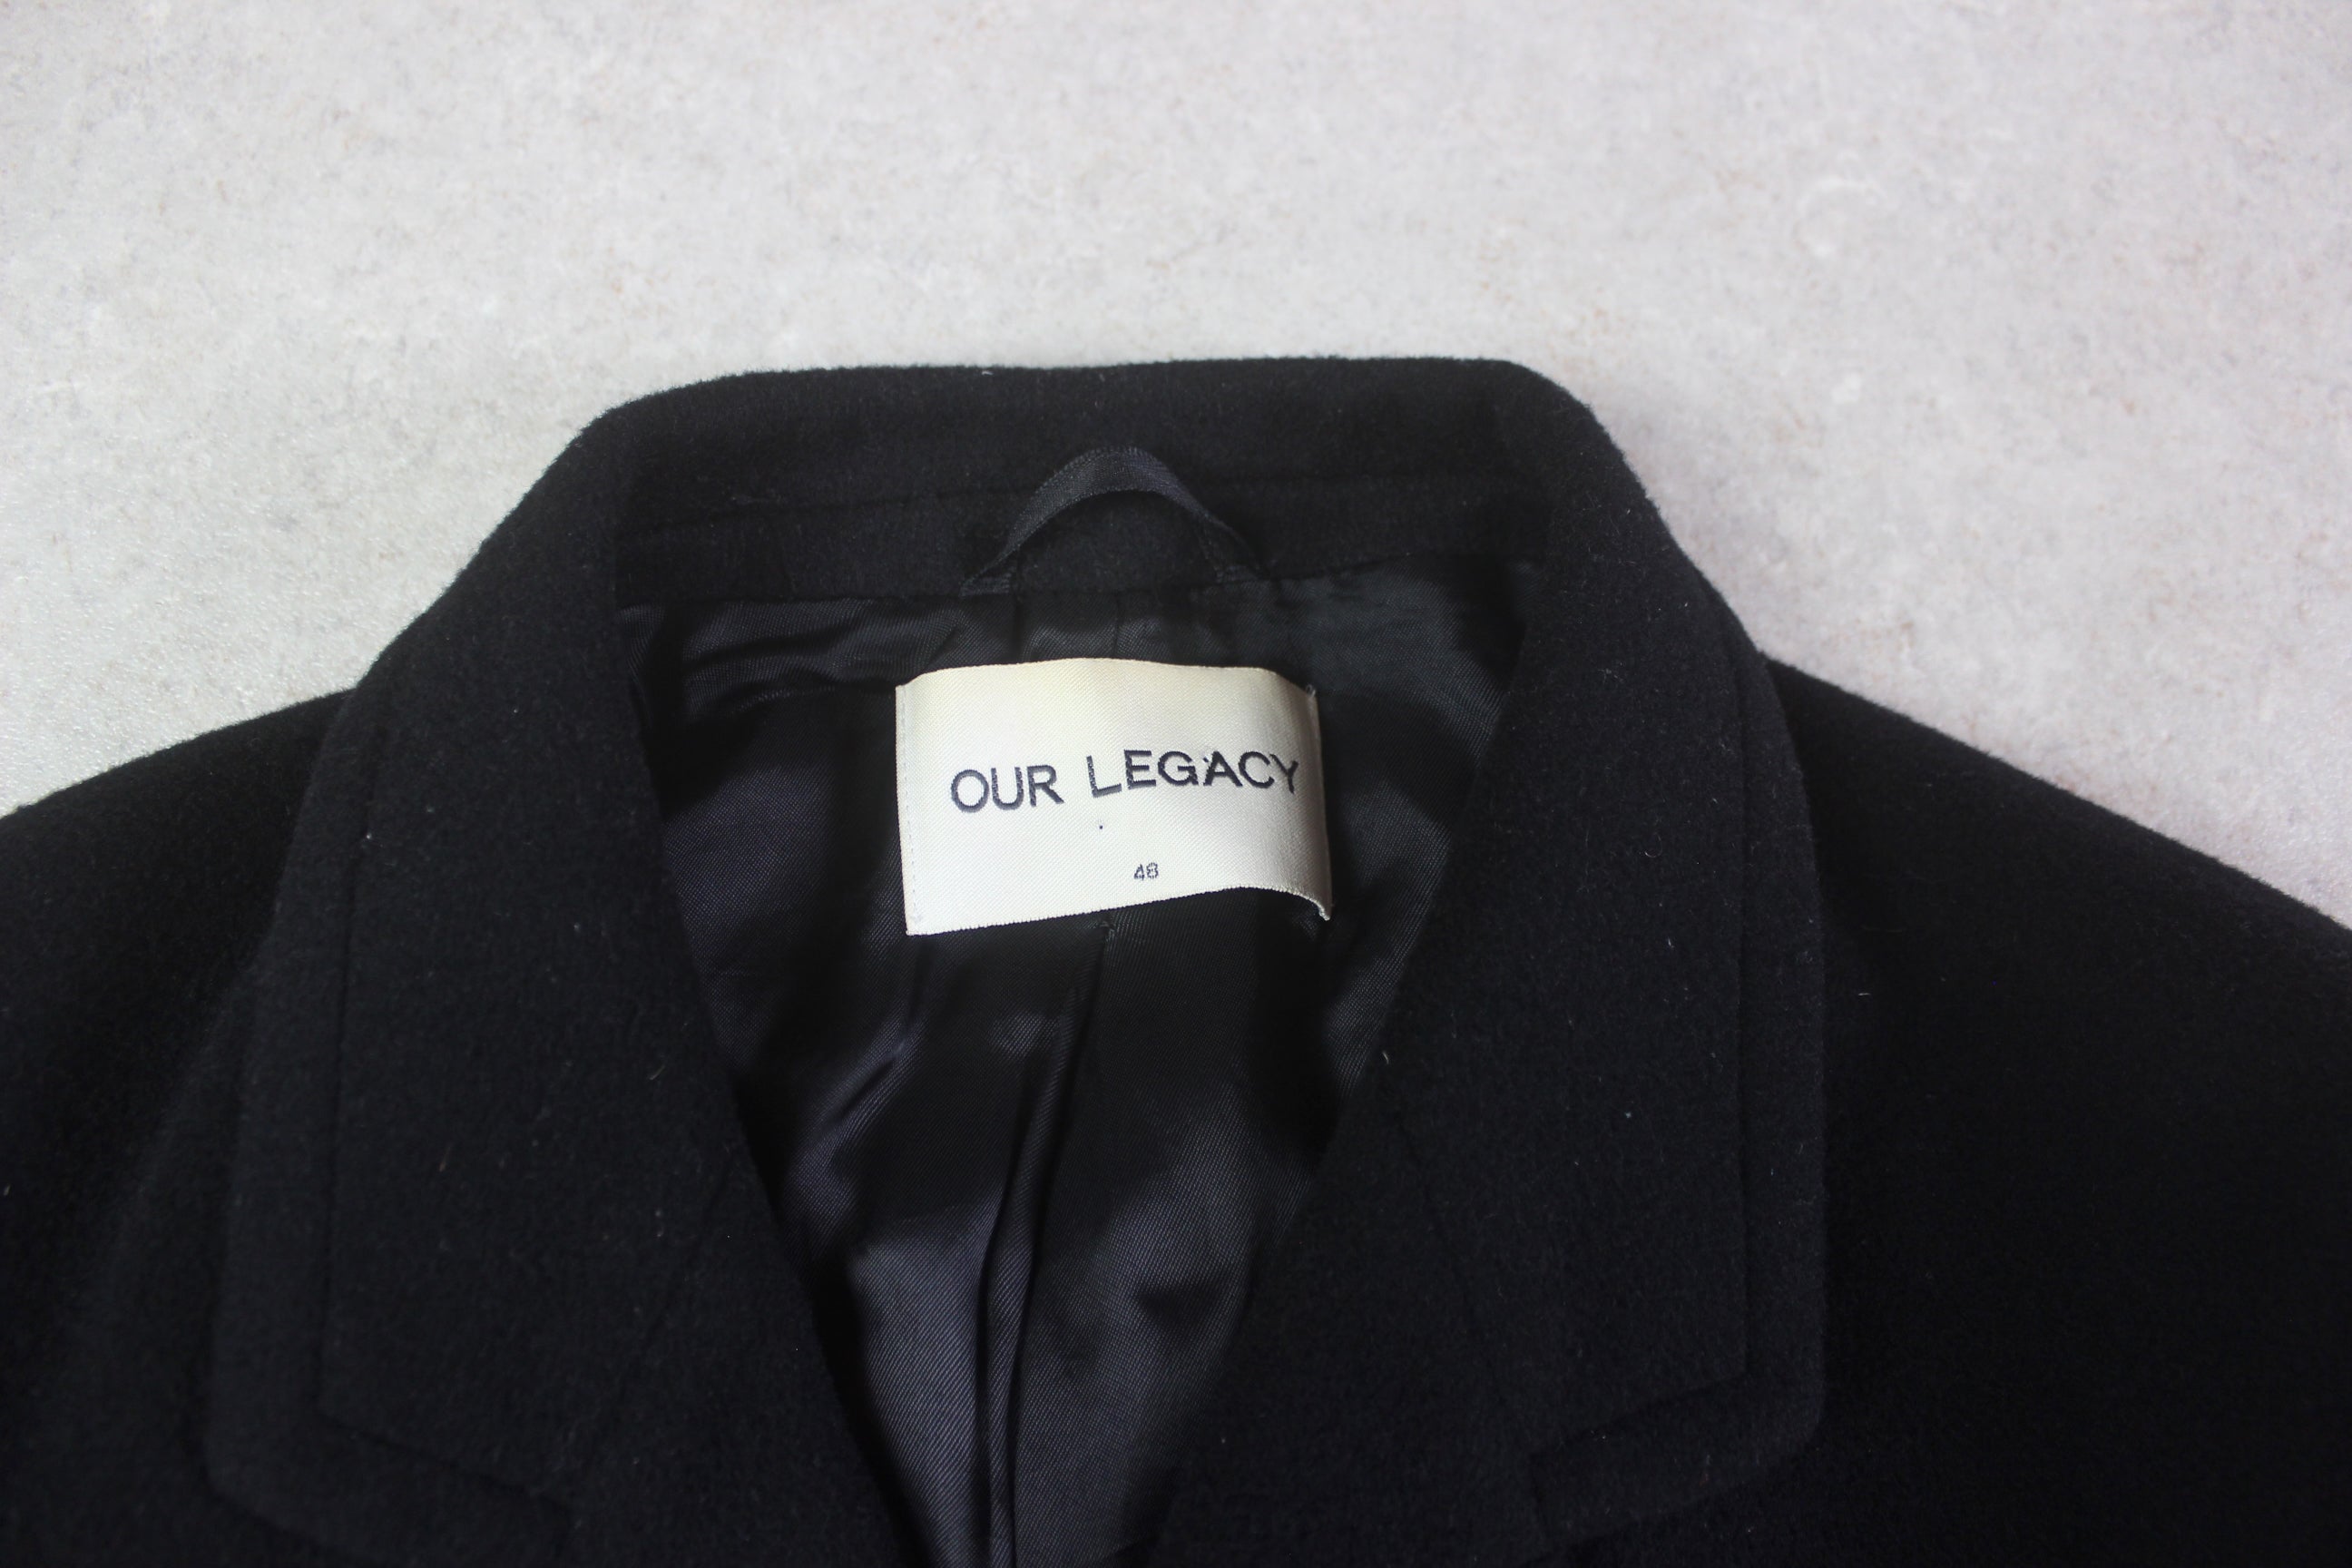 Our Legacy - Wool/Cashmere Coat Jacket - Black - 48/Medium